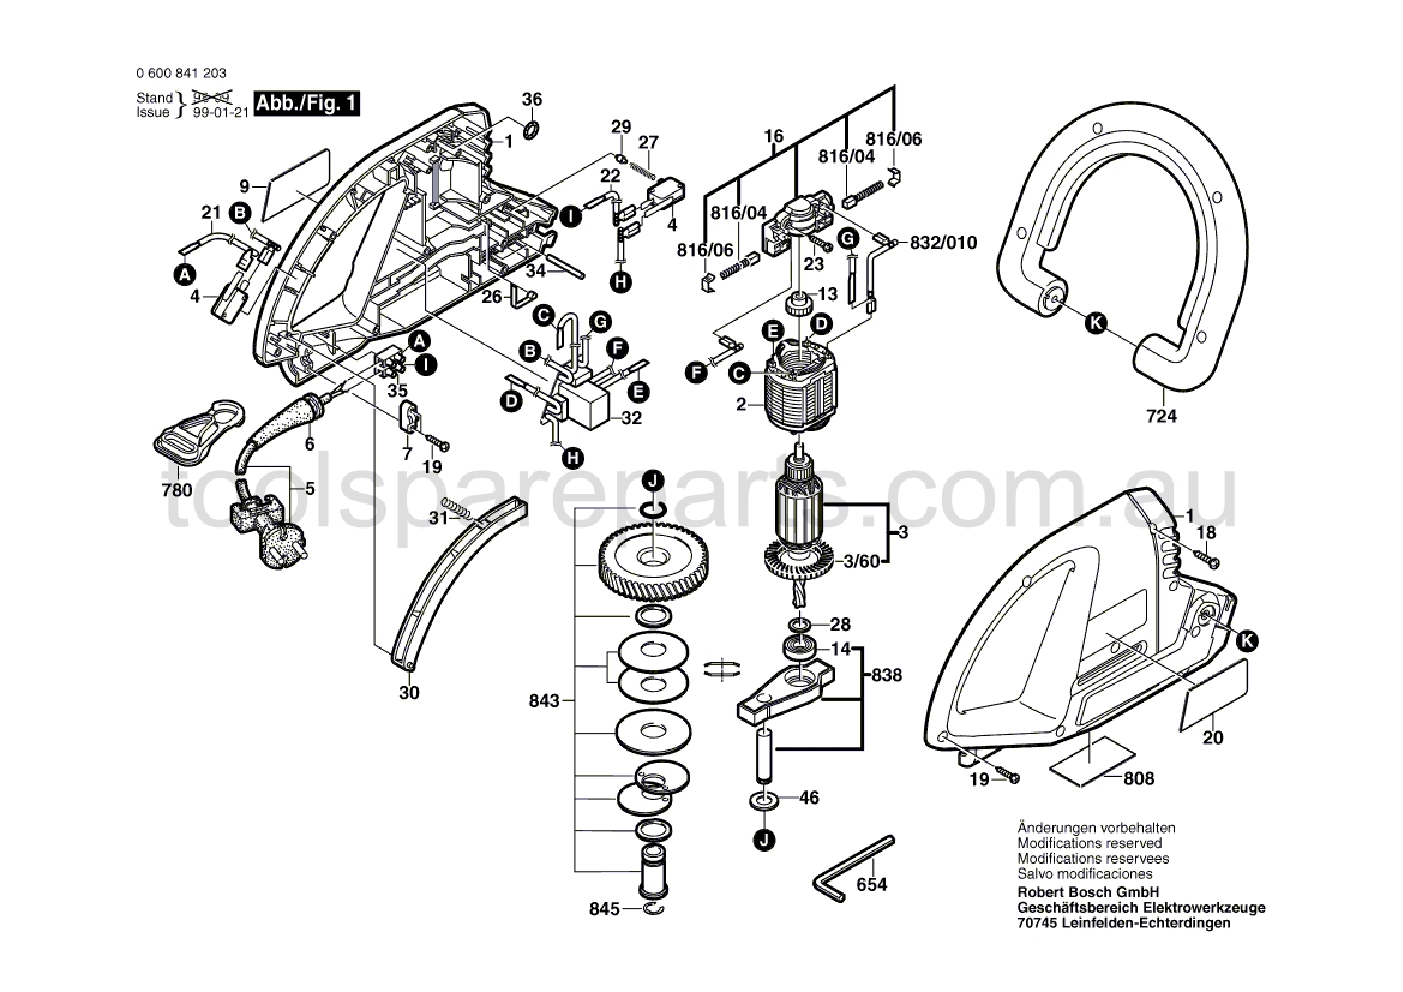 Bosch AHS 55 0600841237  Diagram 1